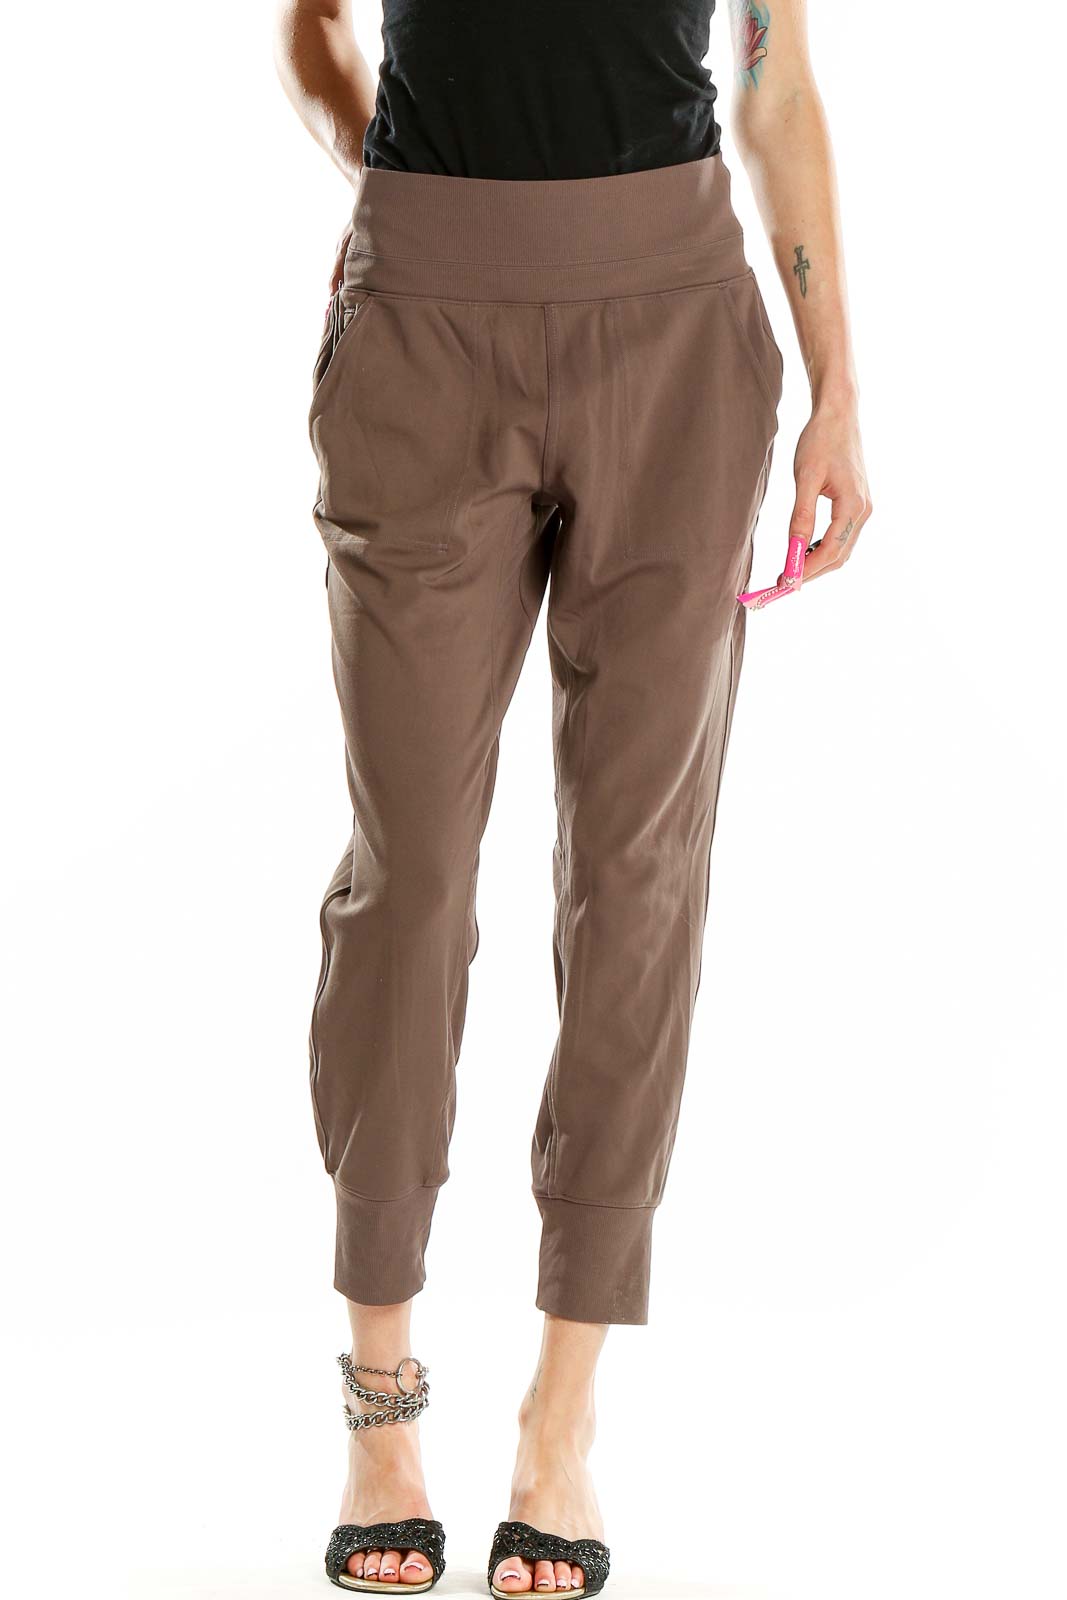 Brown Activewear Pants Front